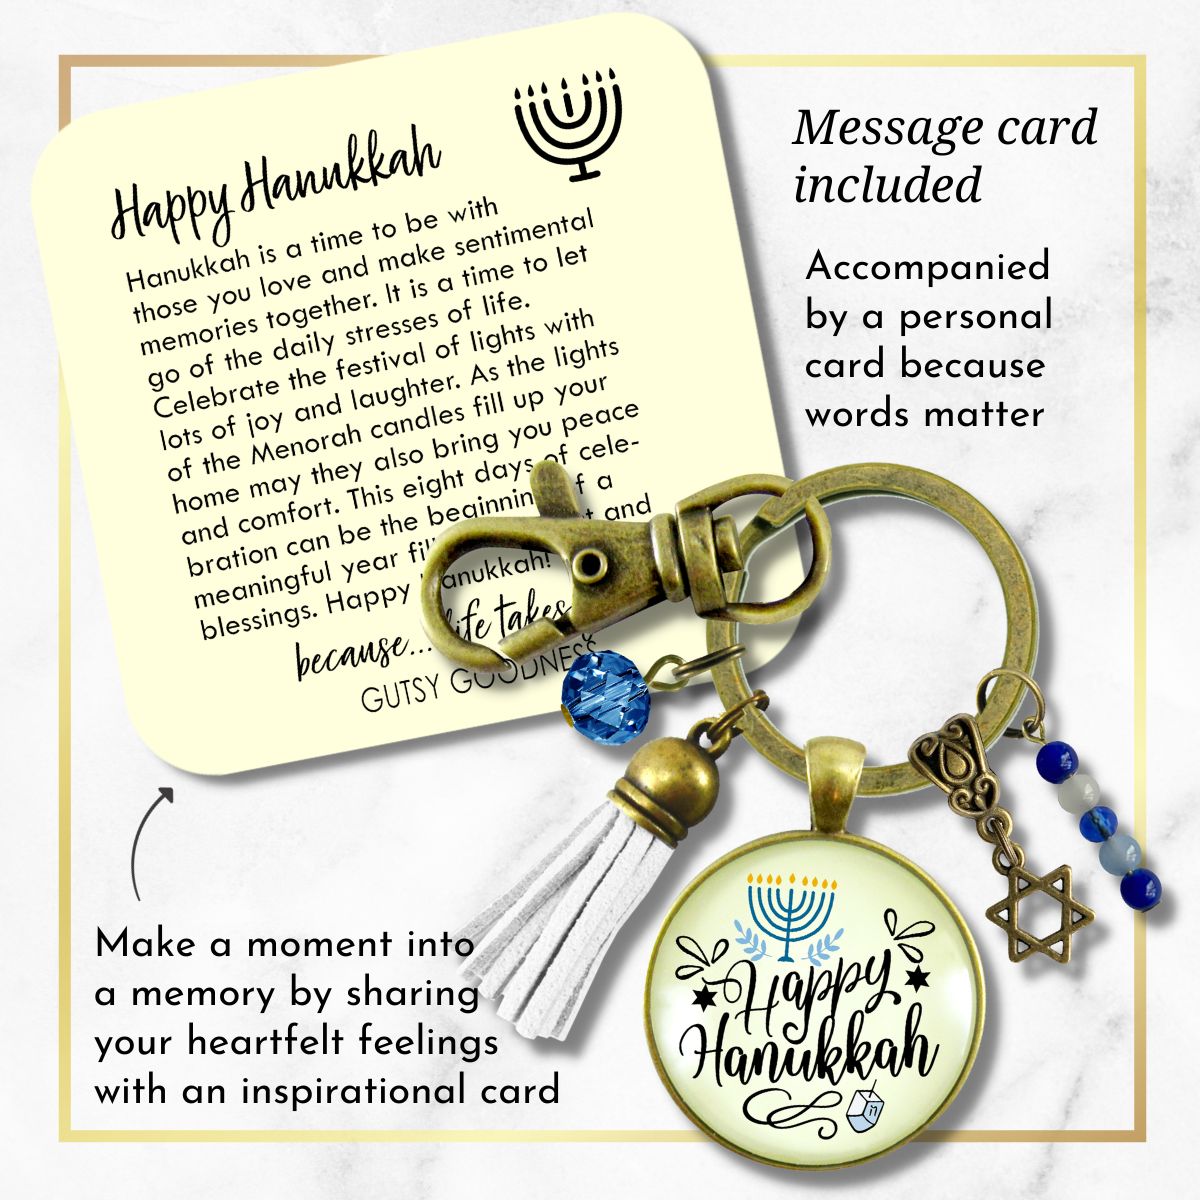 Happy Hanukkah Keychain Handmade Festive Holiday Jewelry Gift For Women Blue Bead Star of David Charm  Keychain - Women - Gutsy Goodness Handmade Jewelry